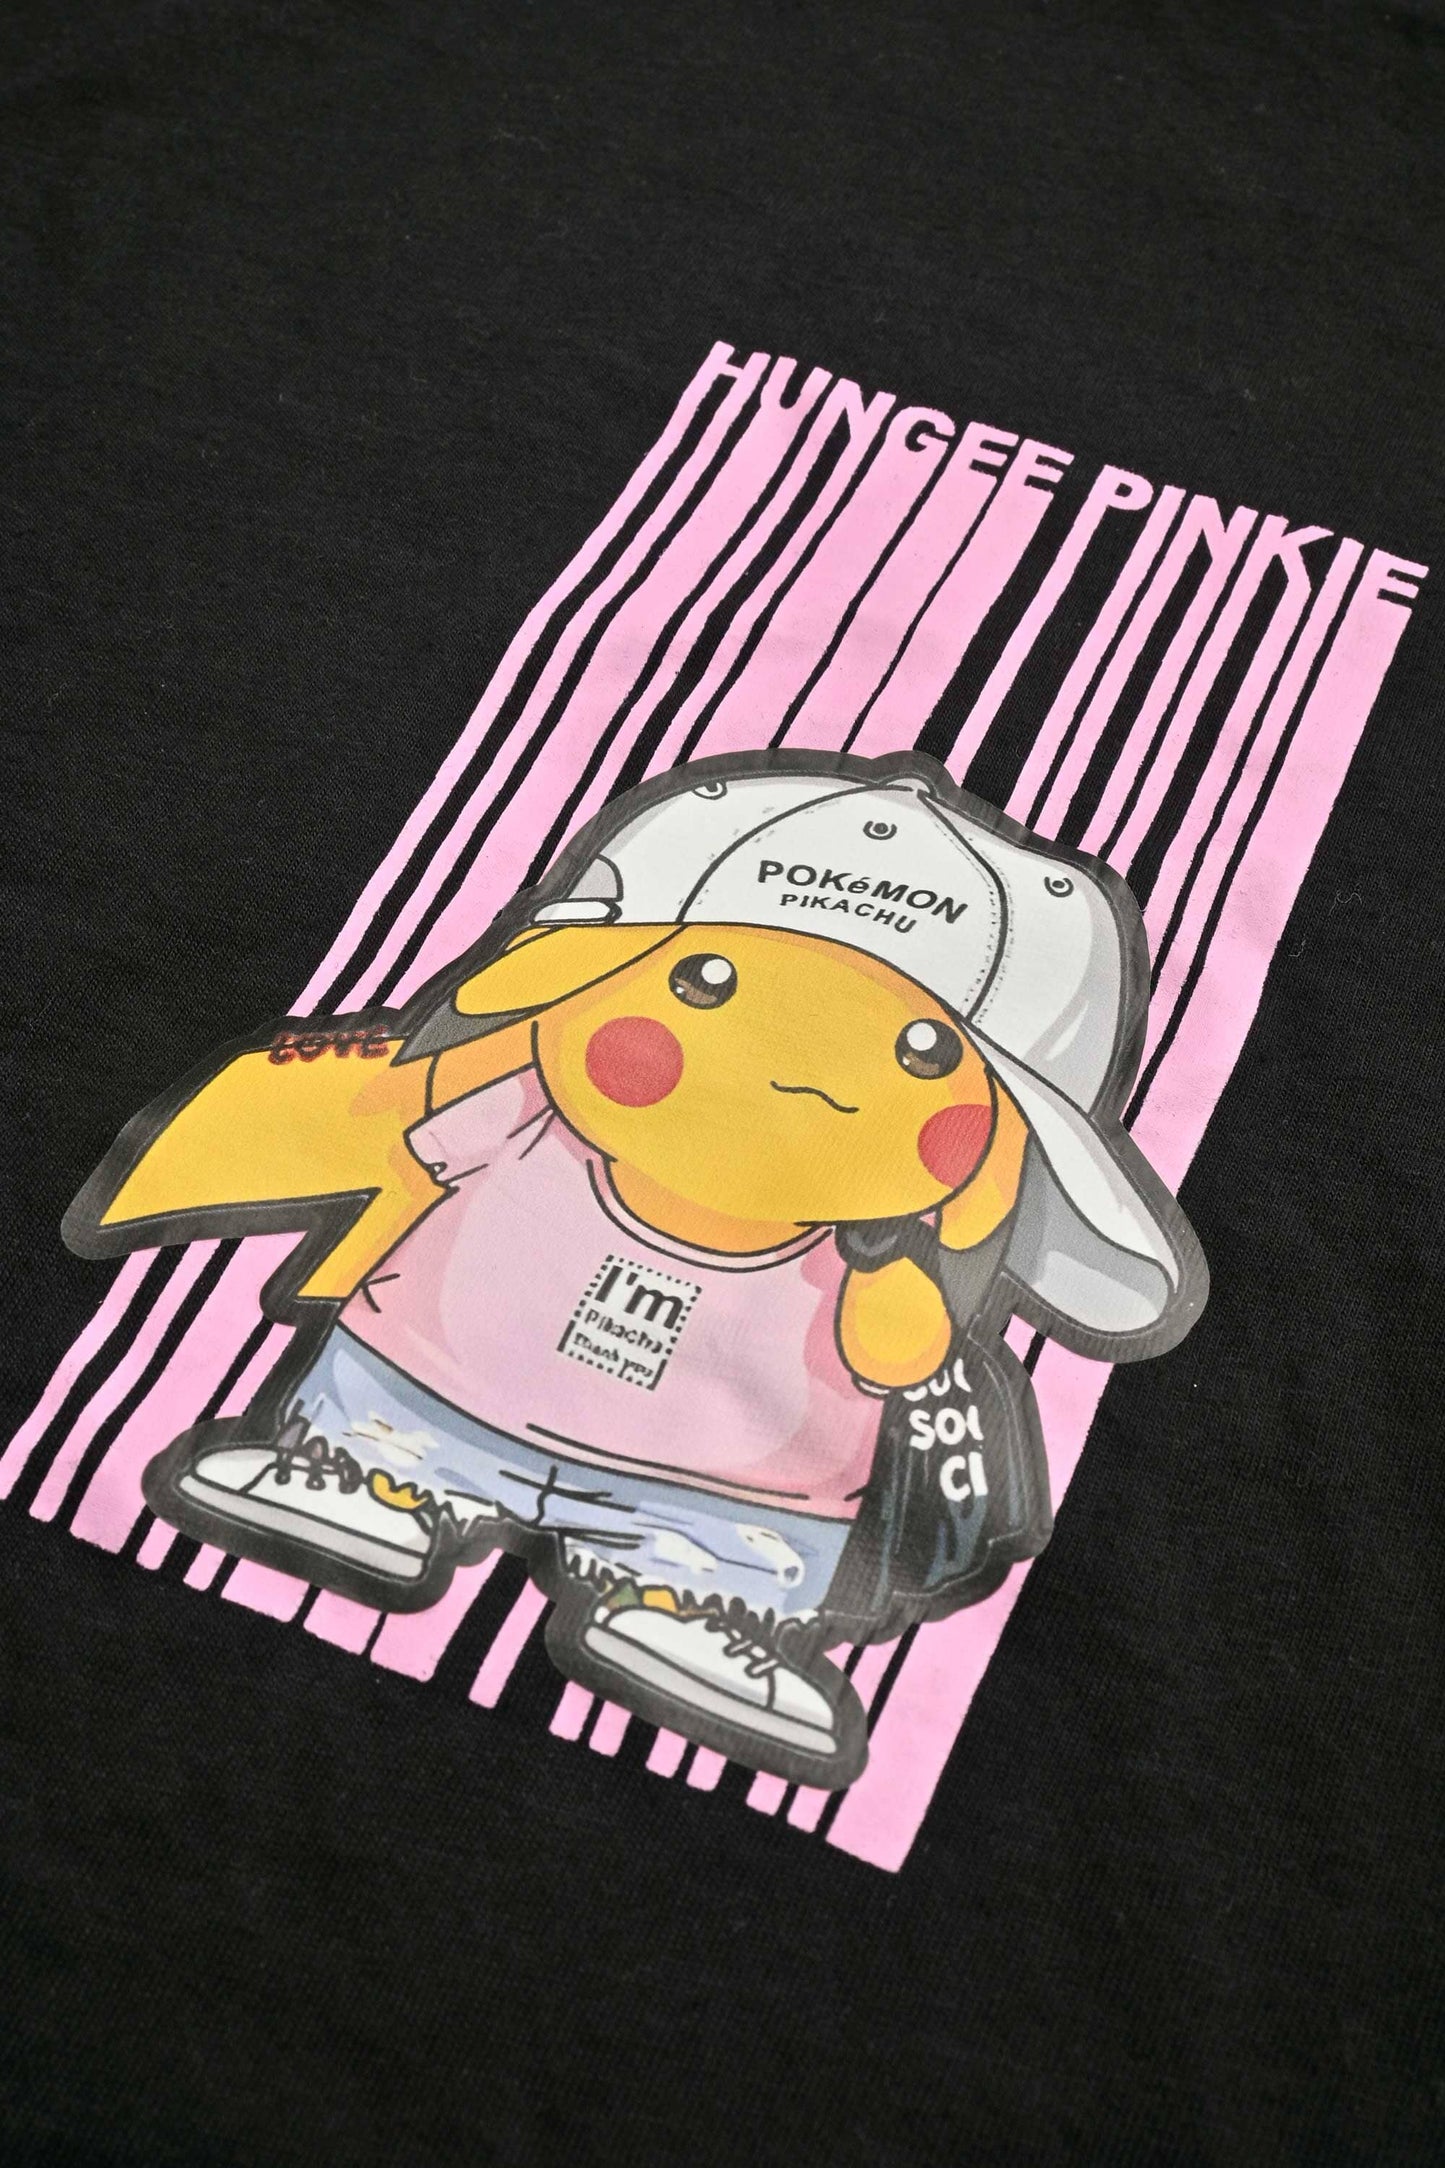 Polo Republica Boy's Pikachu Pinky Printed Tee Shirt Boy's Tee Shirt Polo Republica 